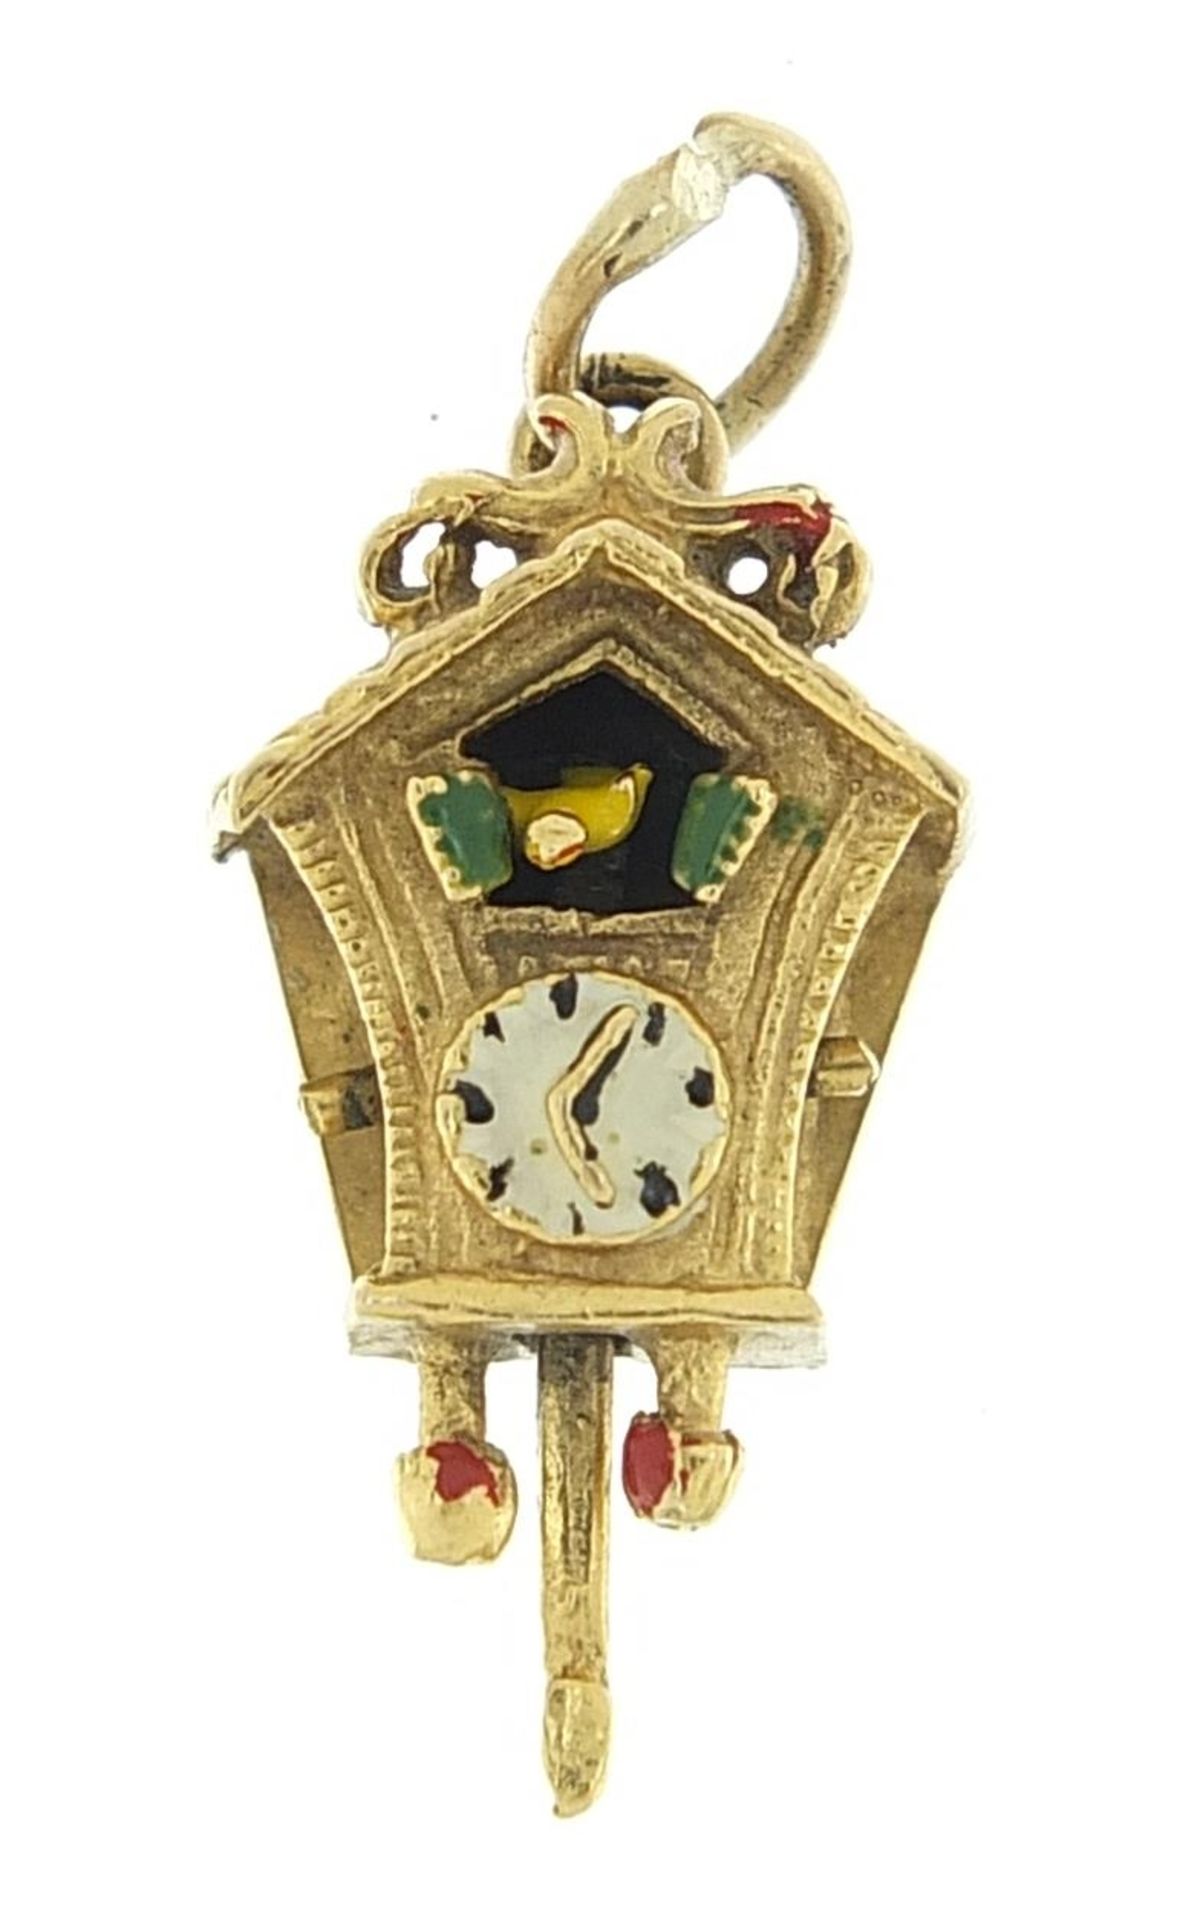 9ct gold and enamel cuckoo clock charm, 2.1cm high, 2.6g